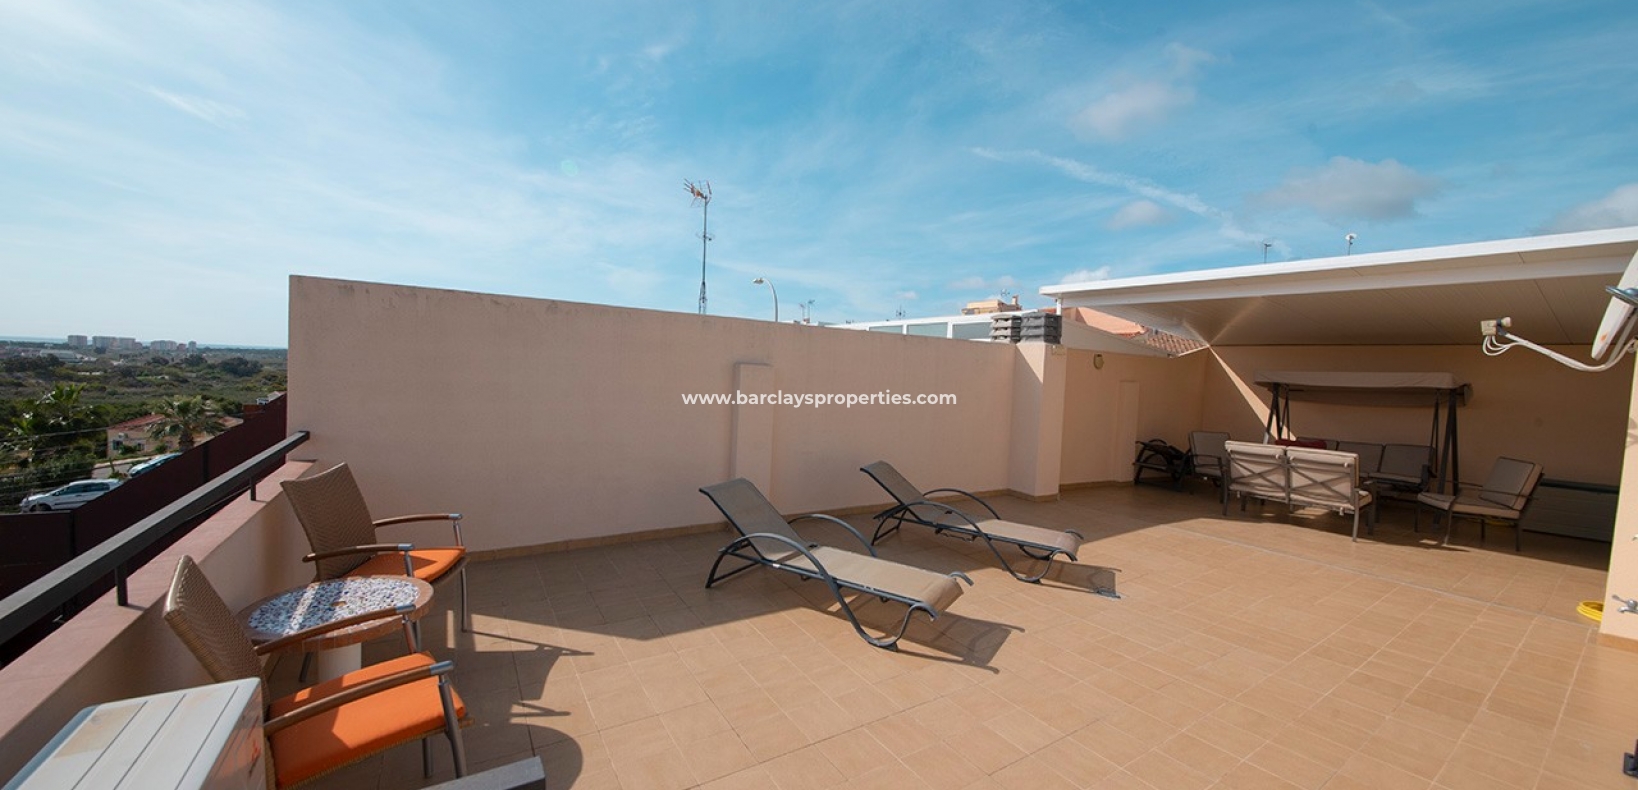 Town House Style Property for Sale in La Marina, Alicante Spain. - solarium